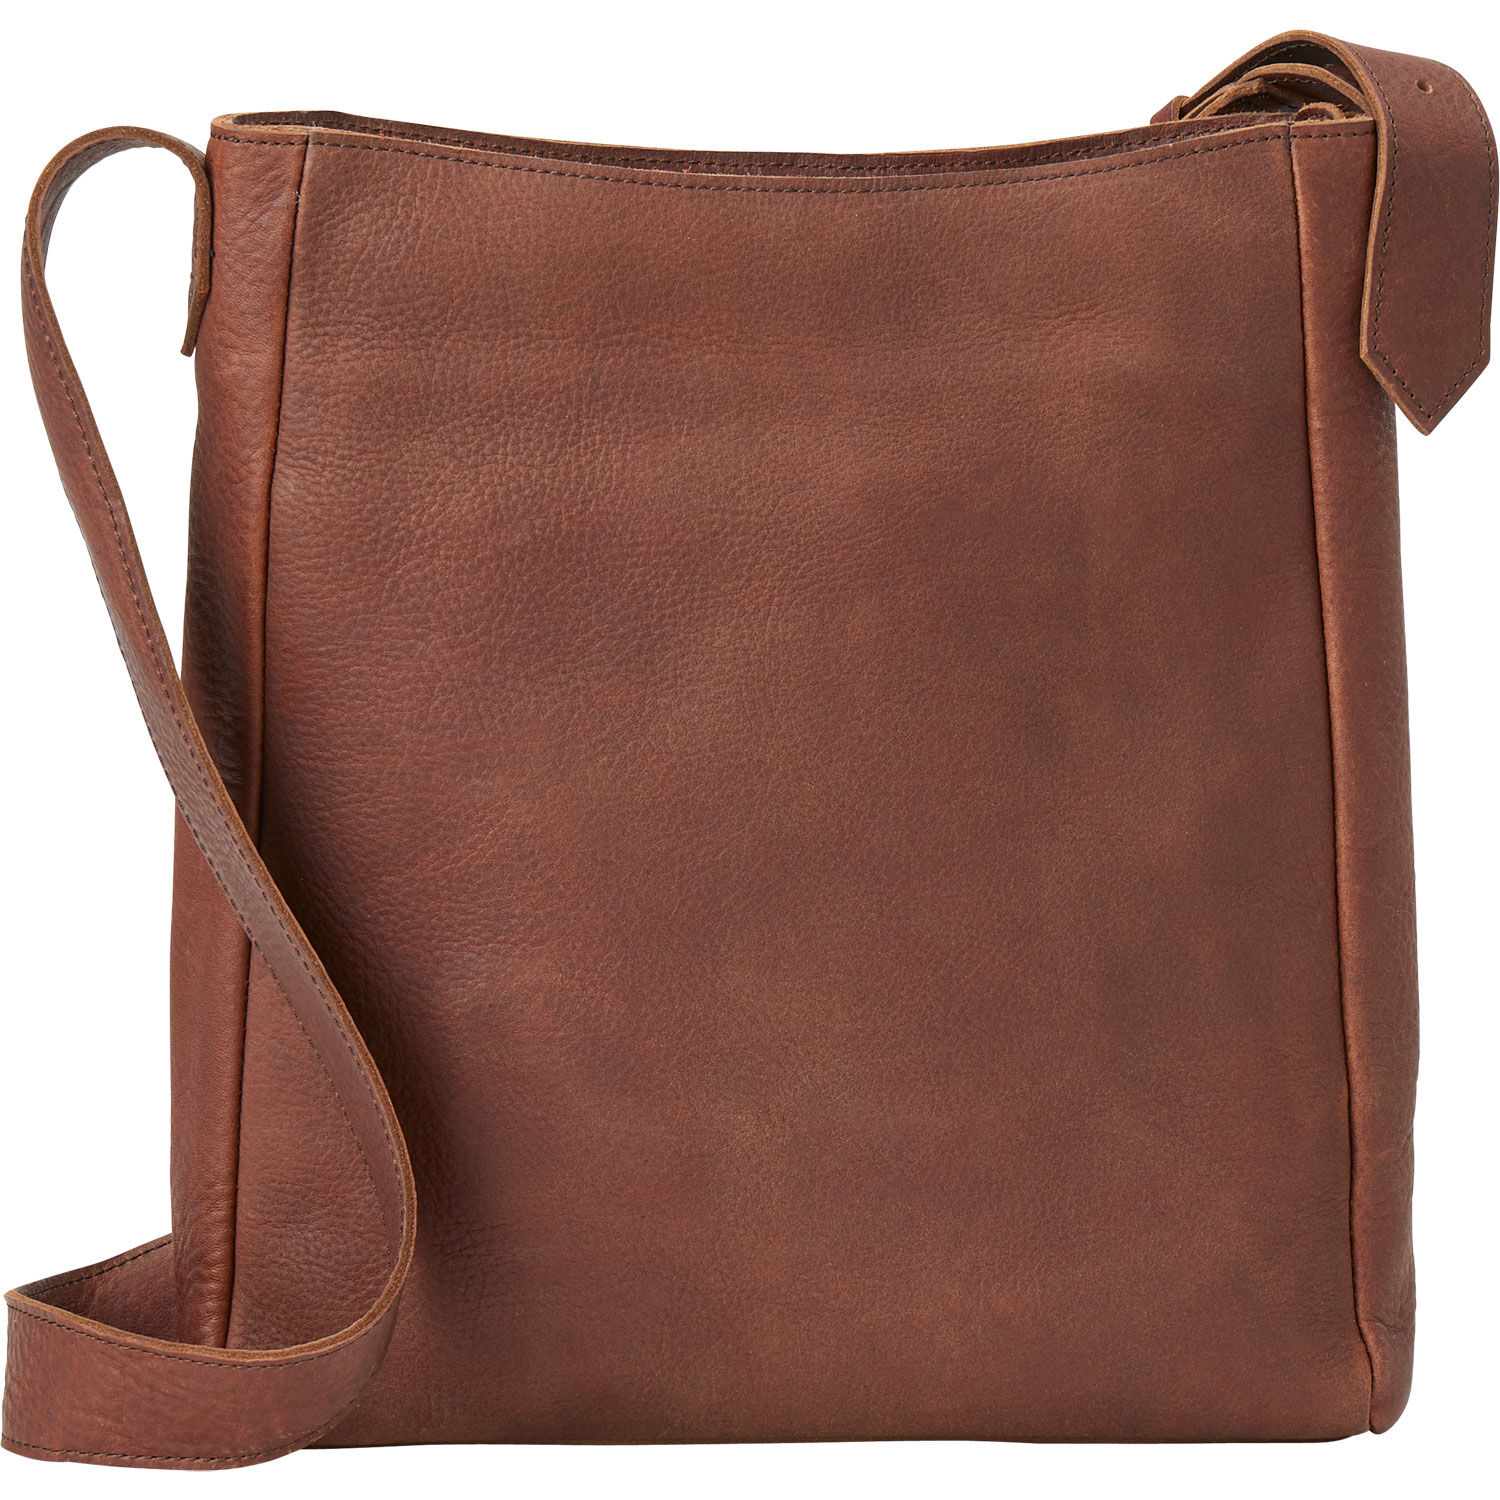 Amazon.com: Leather Sling Bag